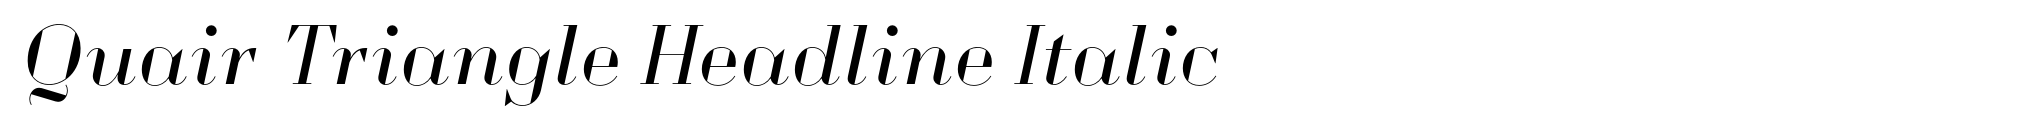 Quair Triangle Headline Italic image